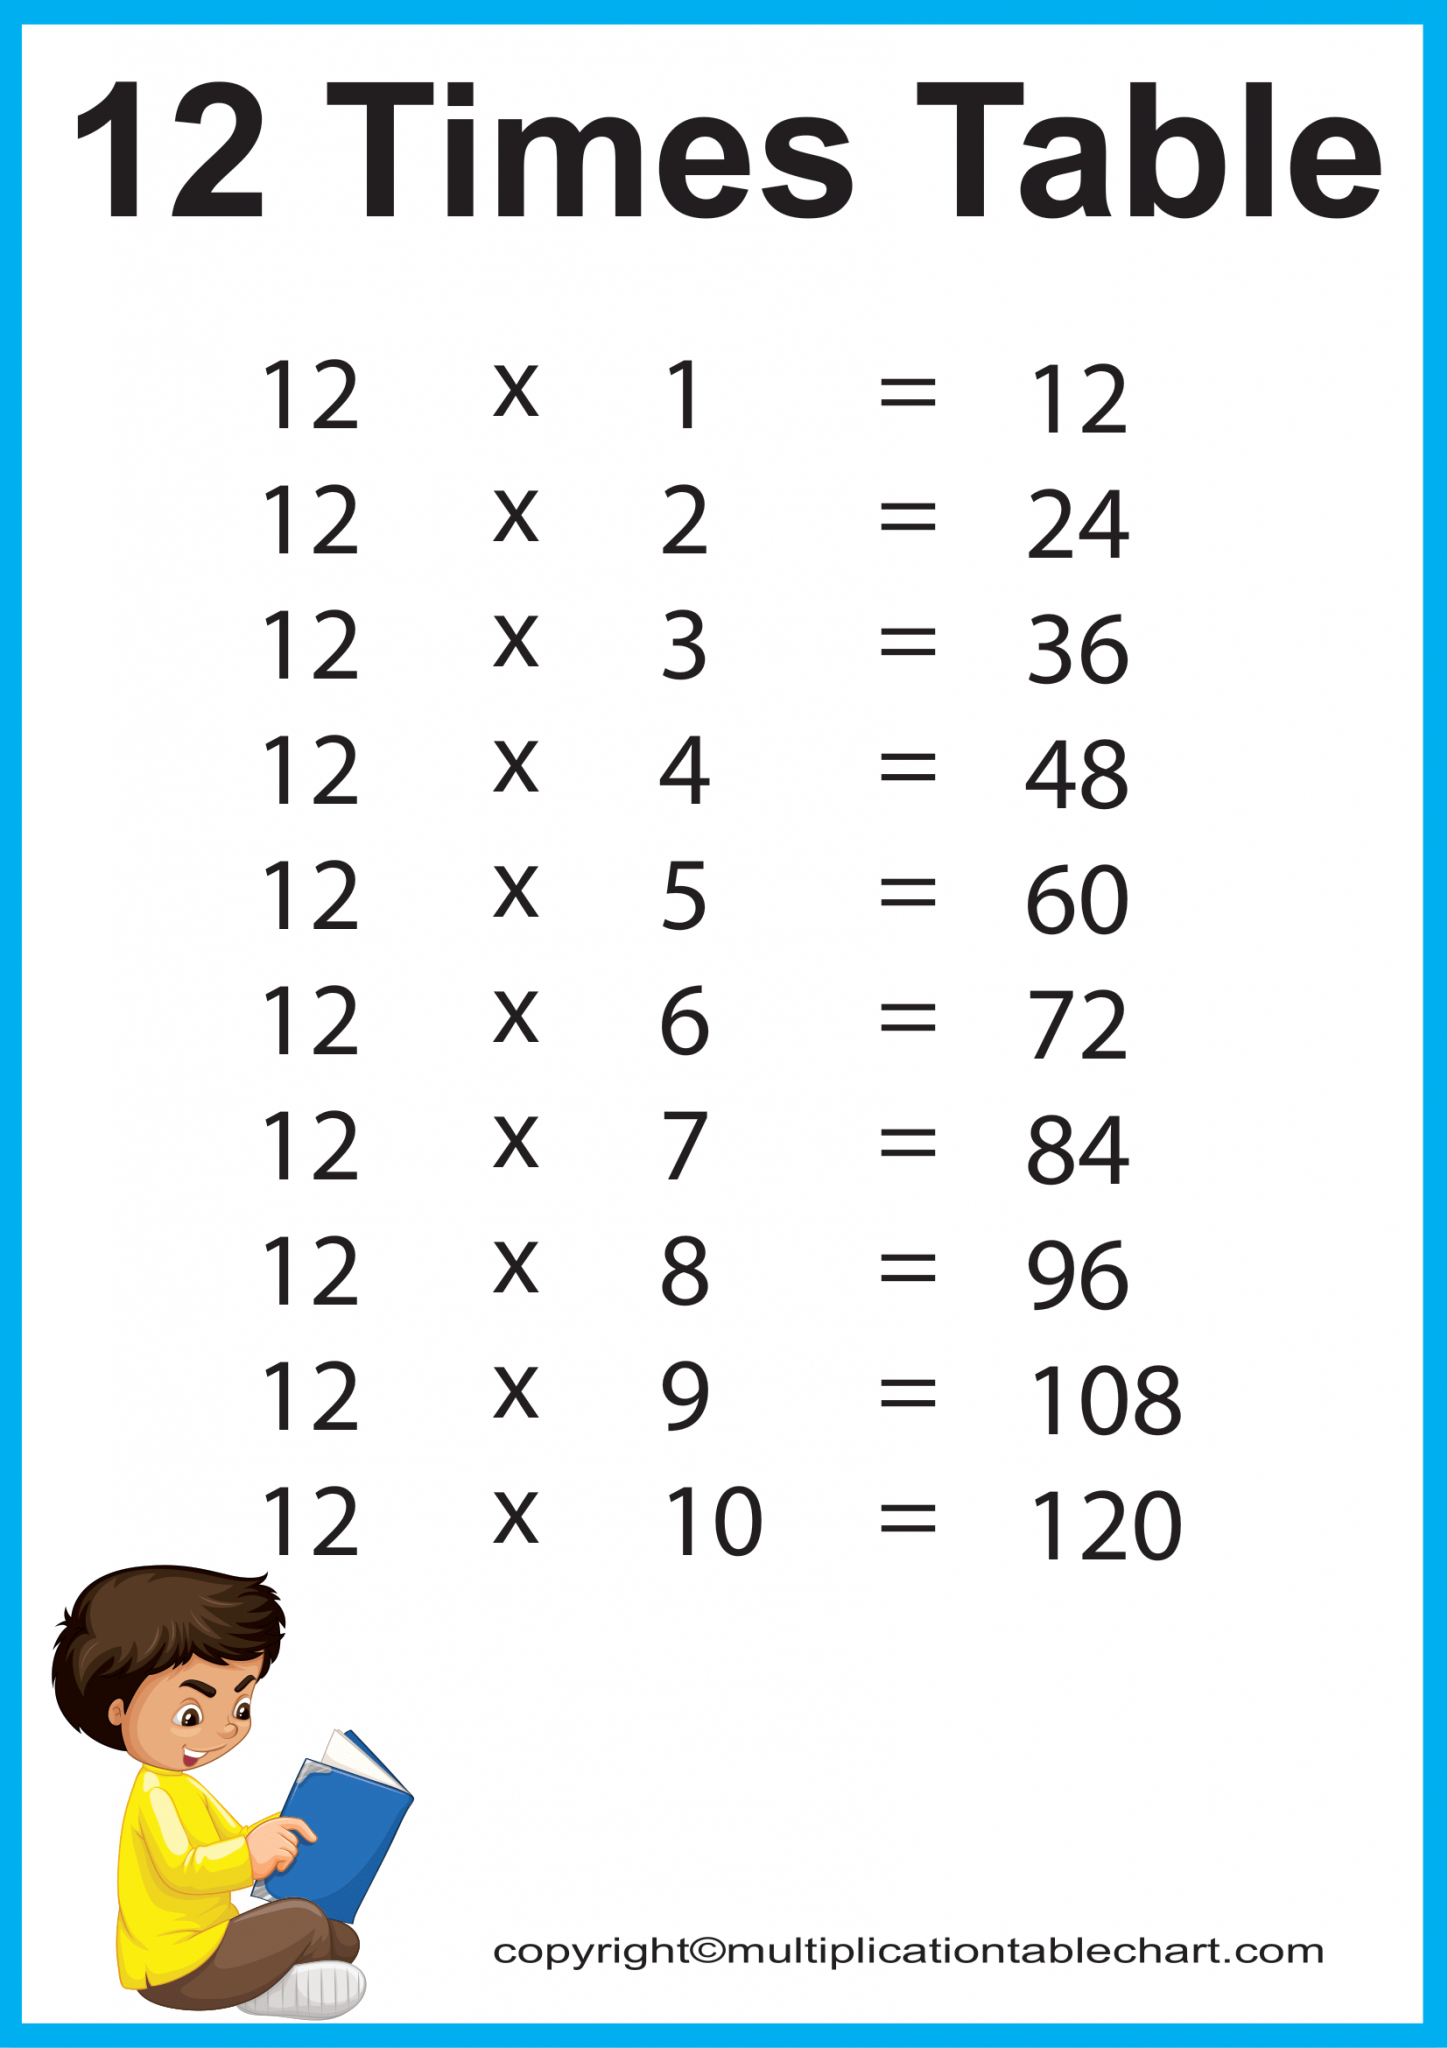 12-times-table-12-multiplication-table-printable-chart